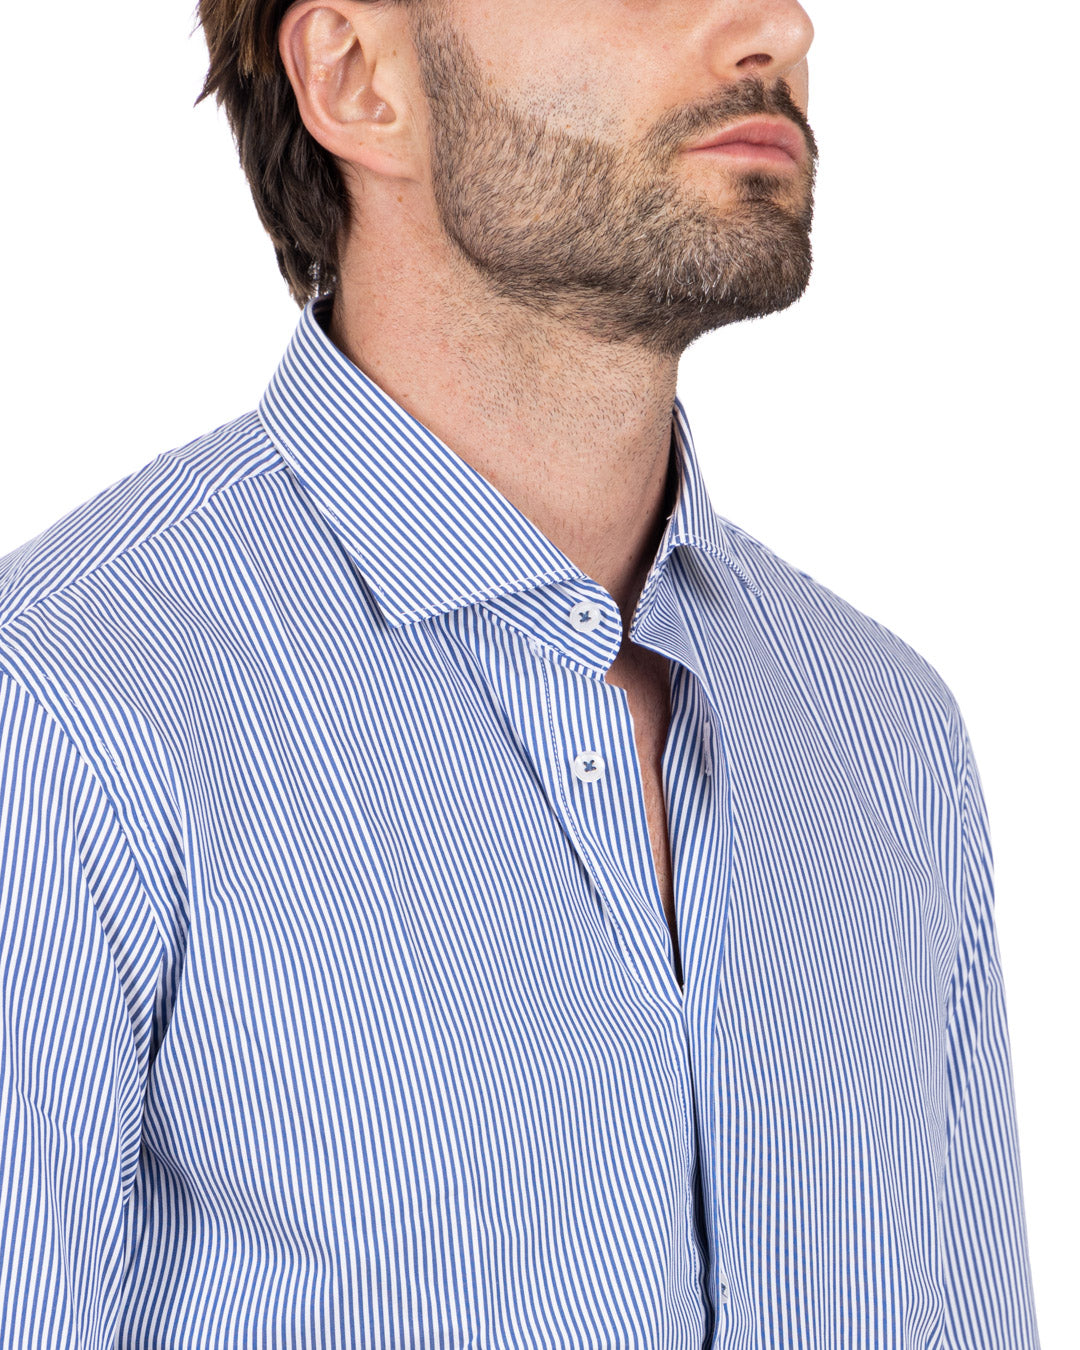 Shirt - classic basic blue narrow stripe in cotton